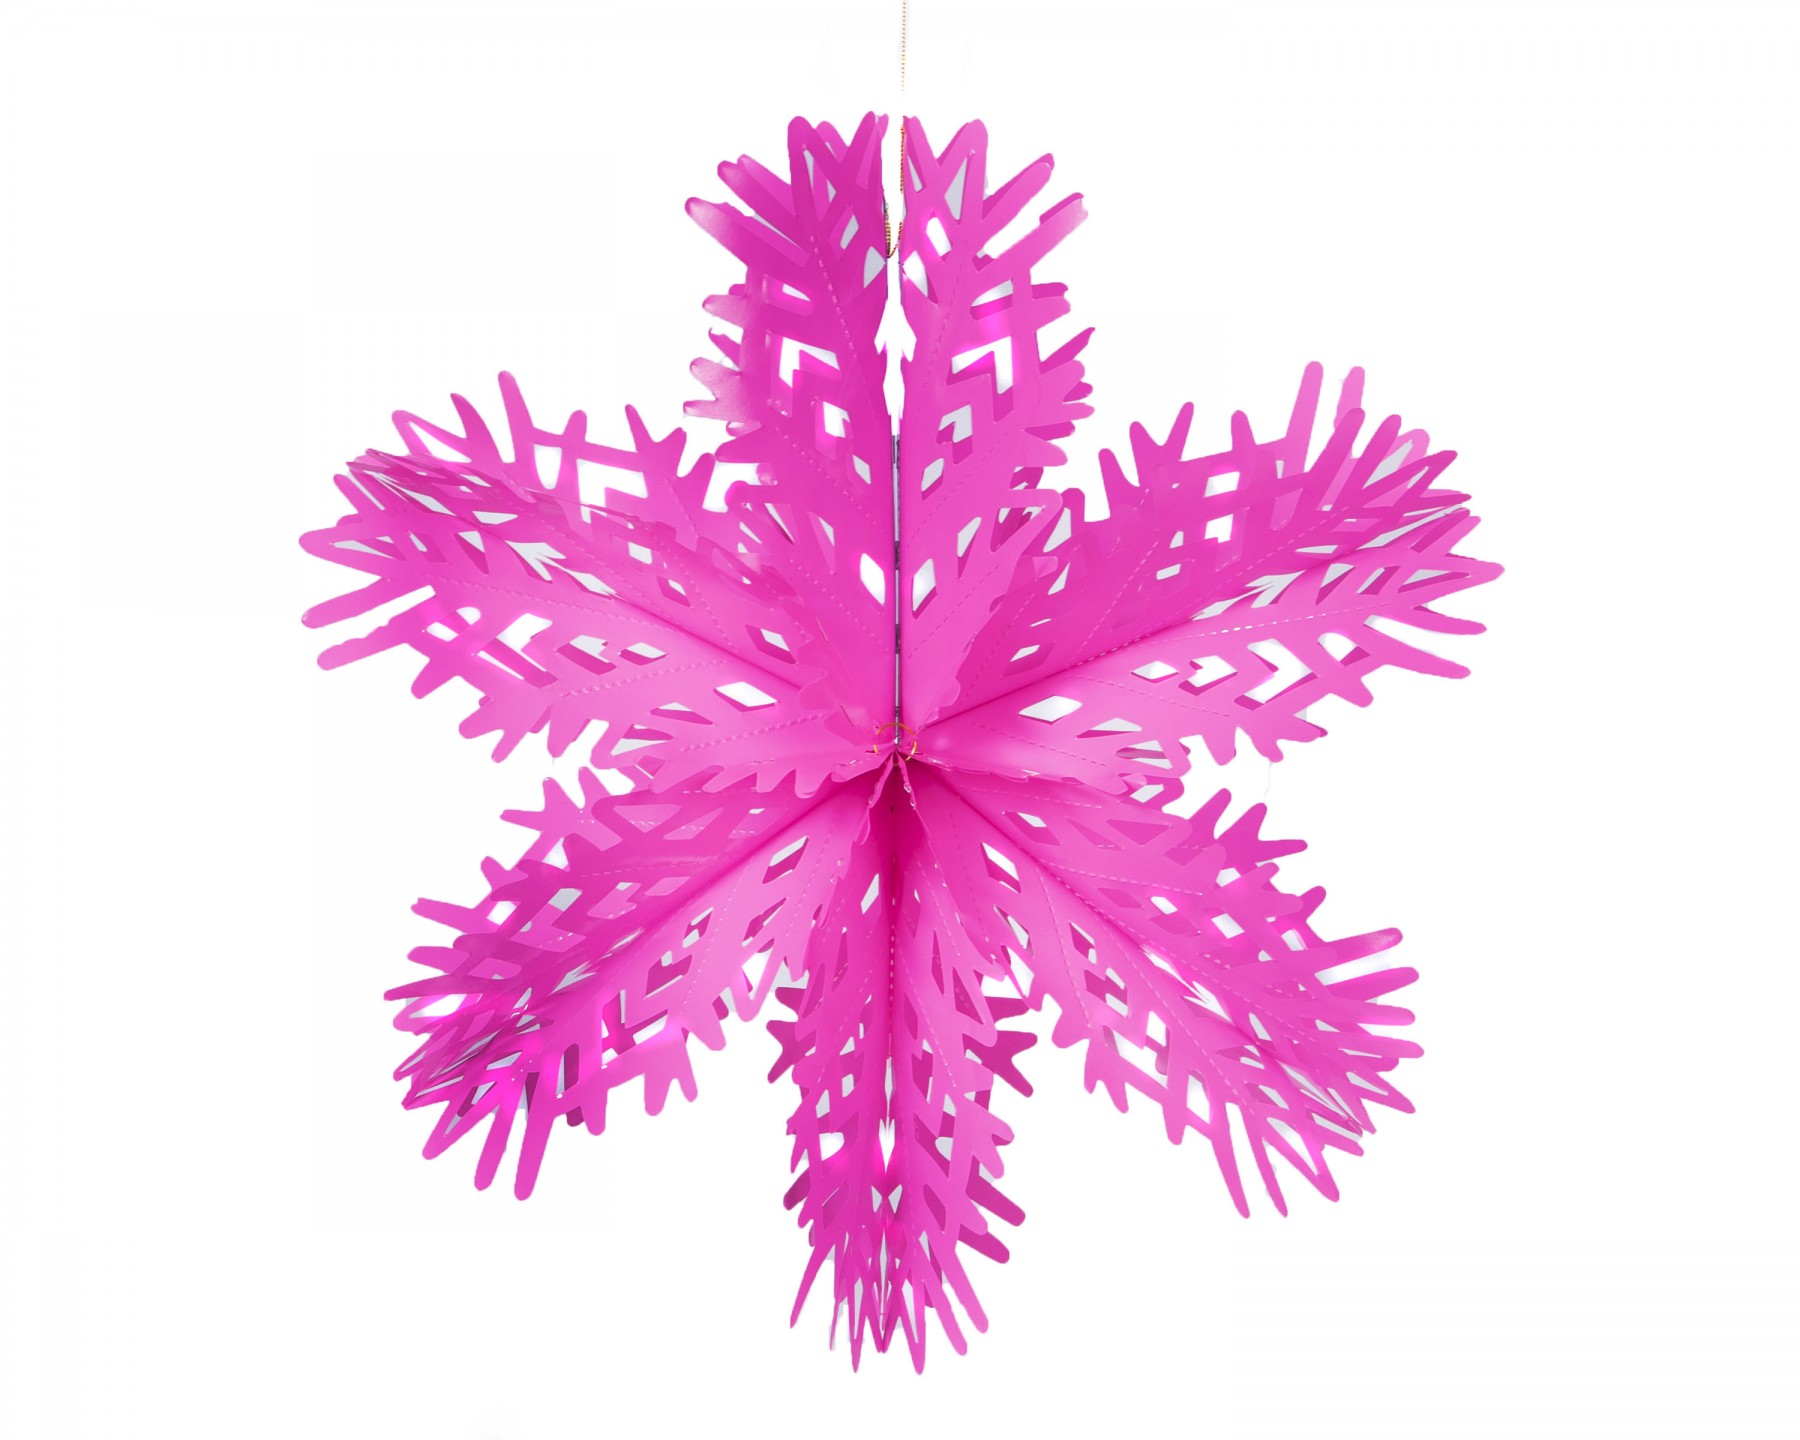 Neon snowflake decoration - pink